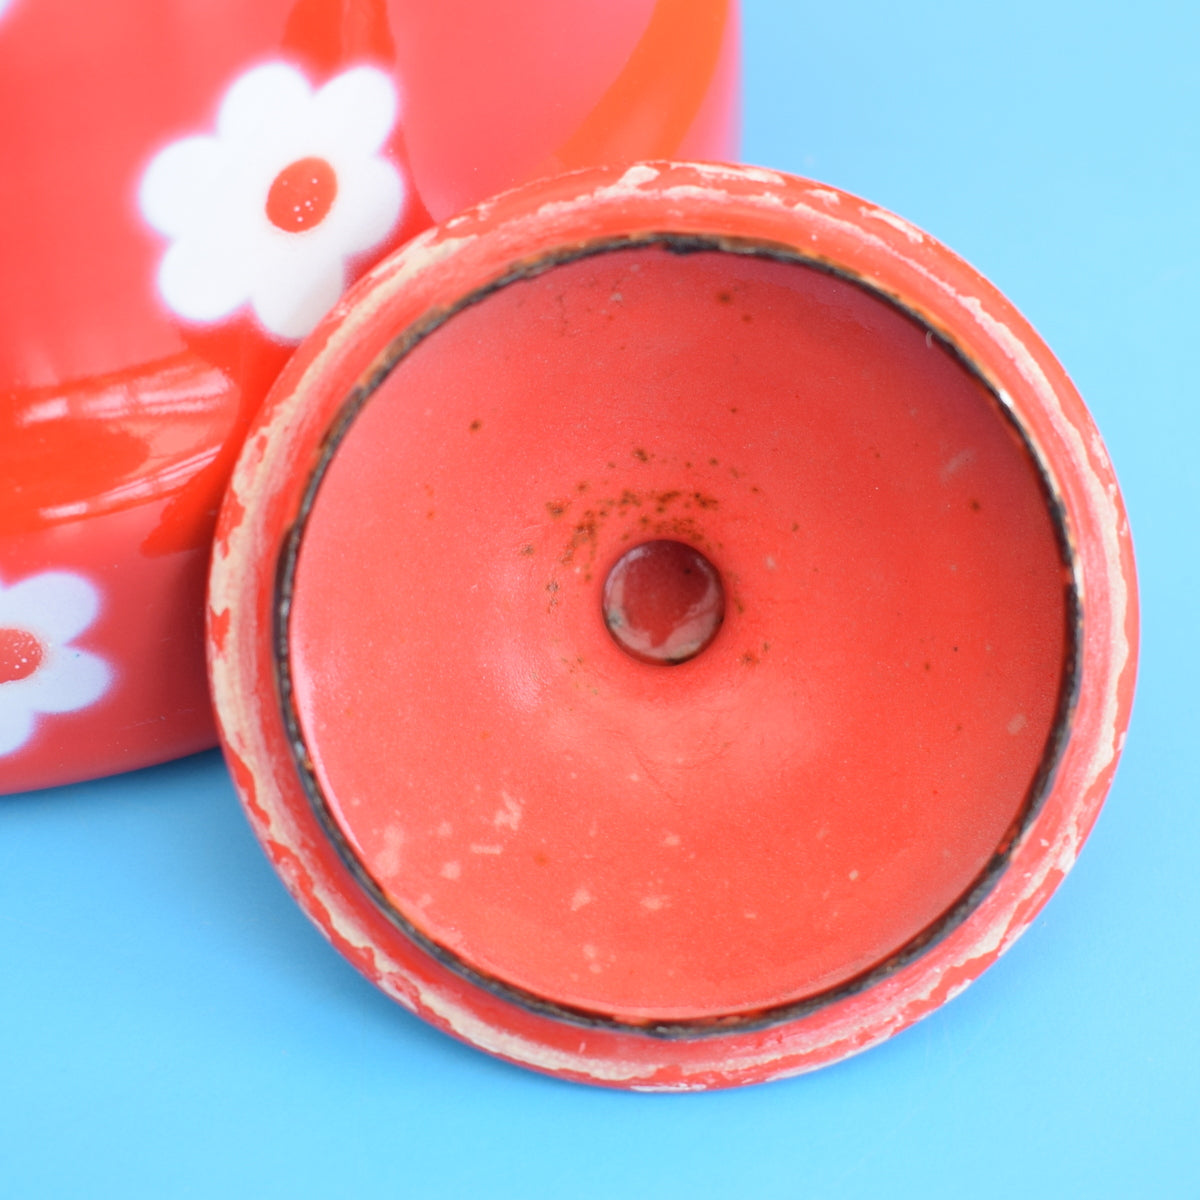 Vintage 1960s Small Enamel Tea Pot / Kettle - Red Flower Power